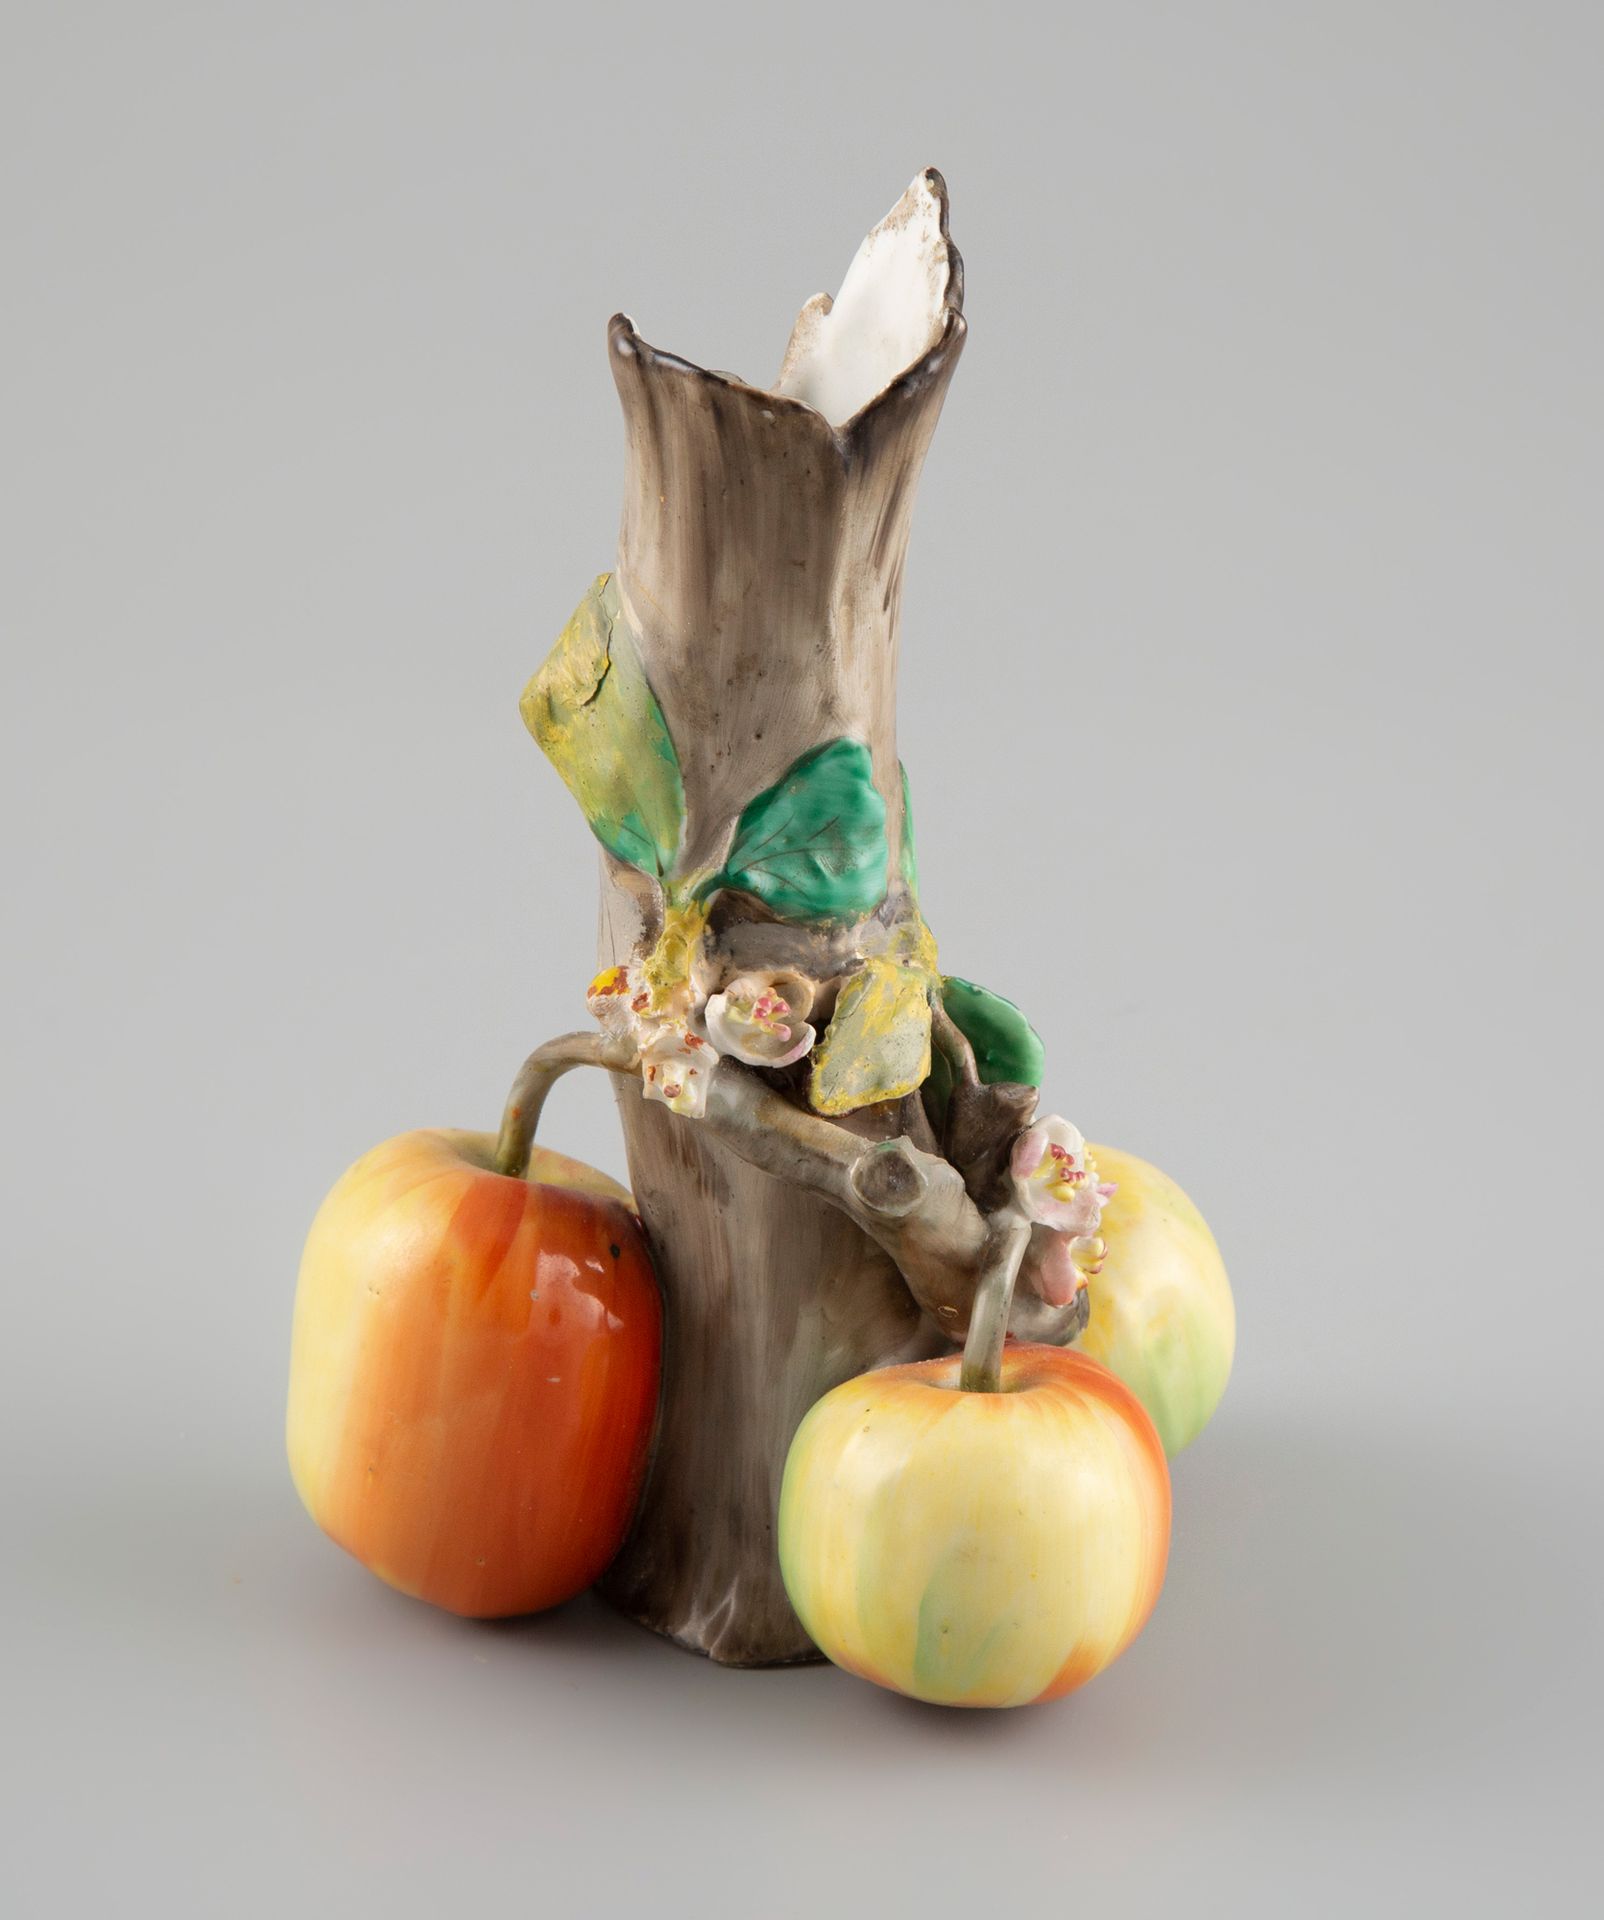 Null Vase, The three apples

H.: 15,5 cm (hair on the bottom)